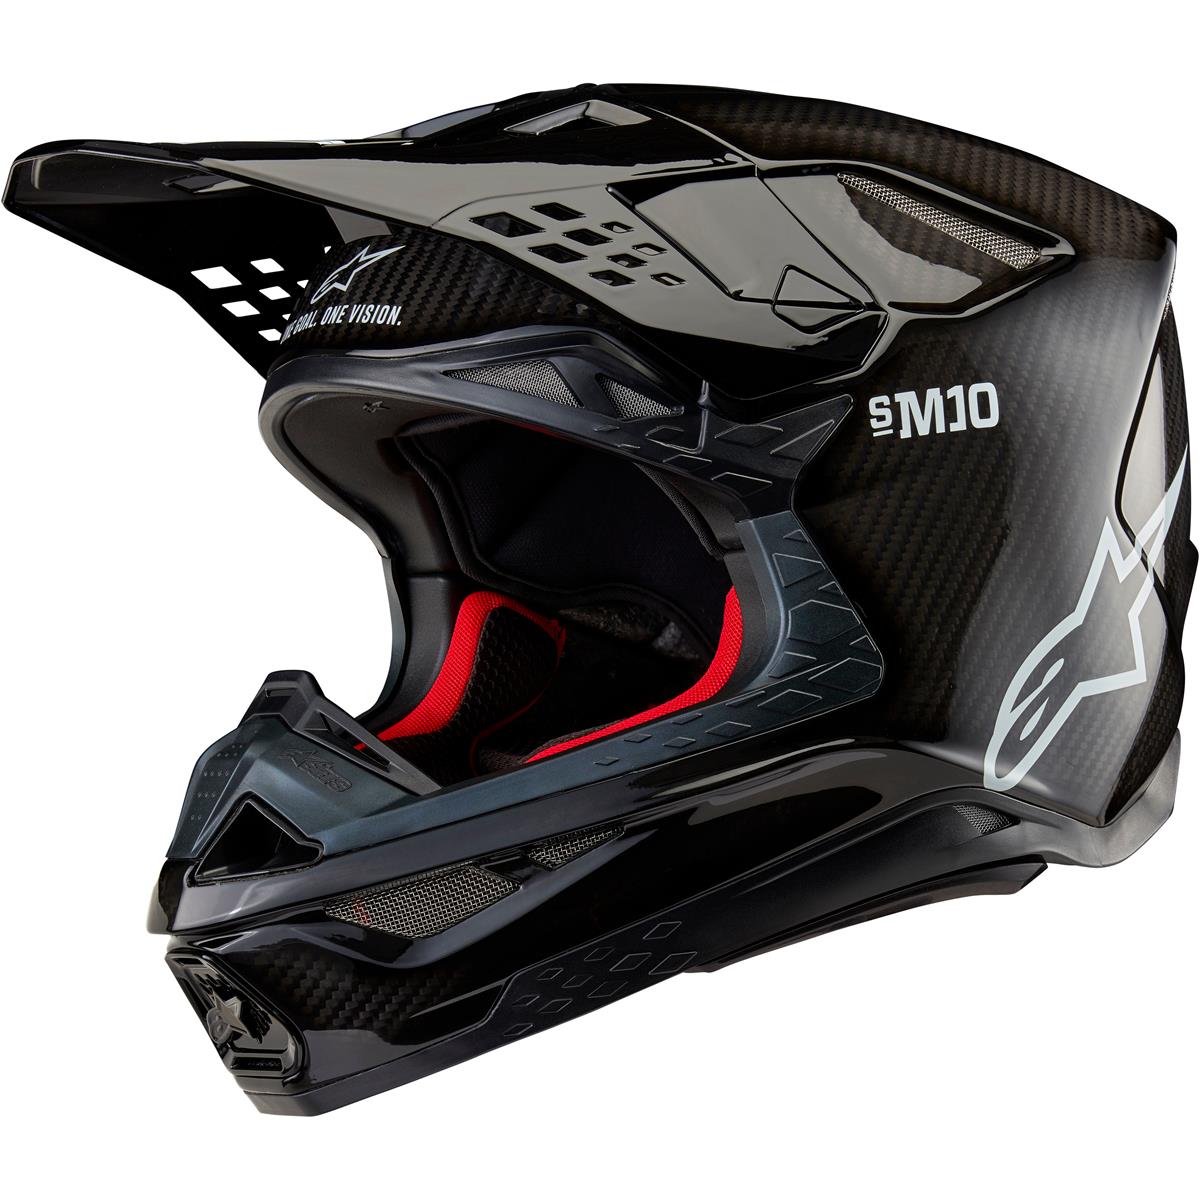 Alpinestars Motocross-Helm Supertech S-M10 Solid - Schwarz/Glossy/Carbon